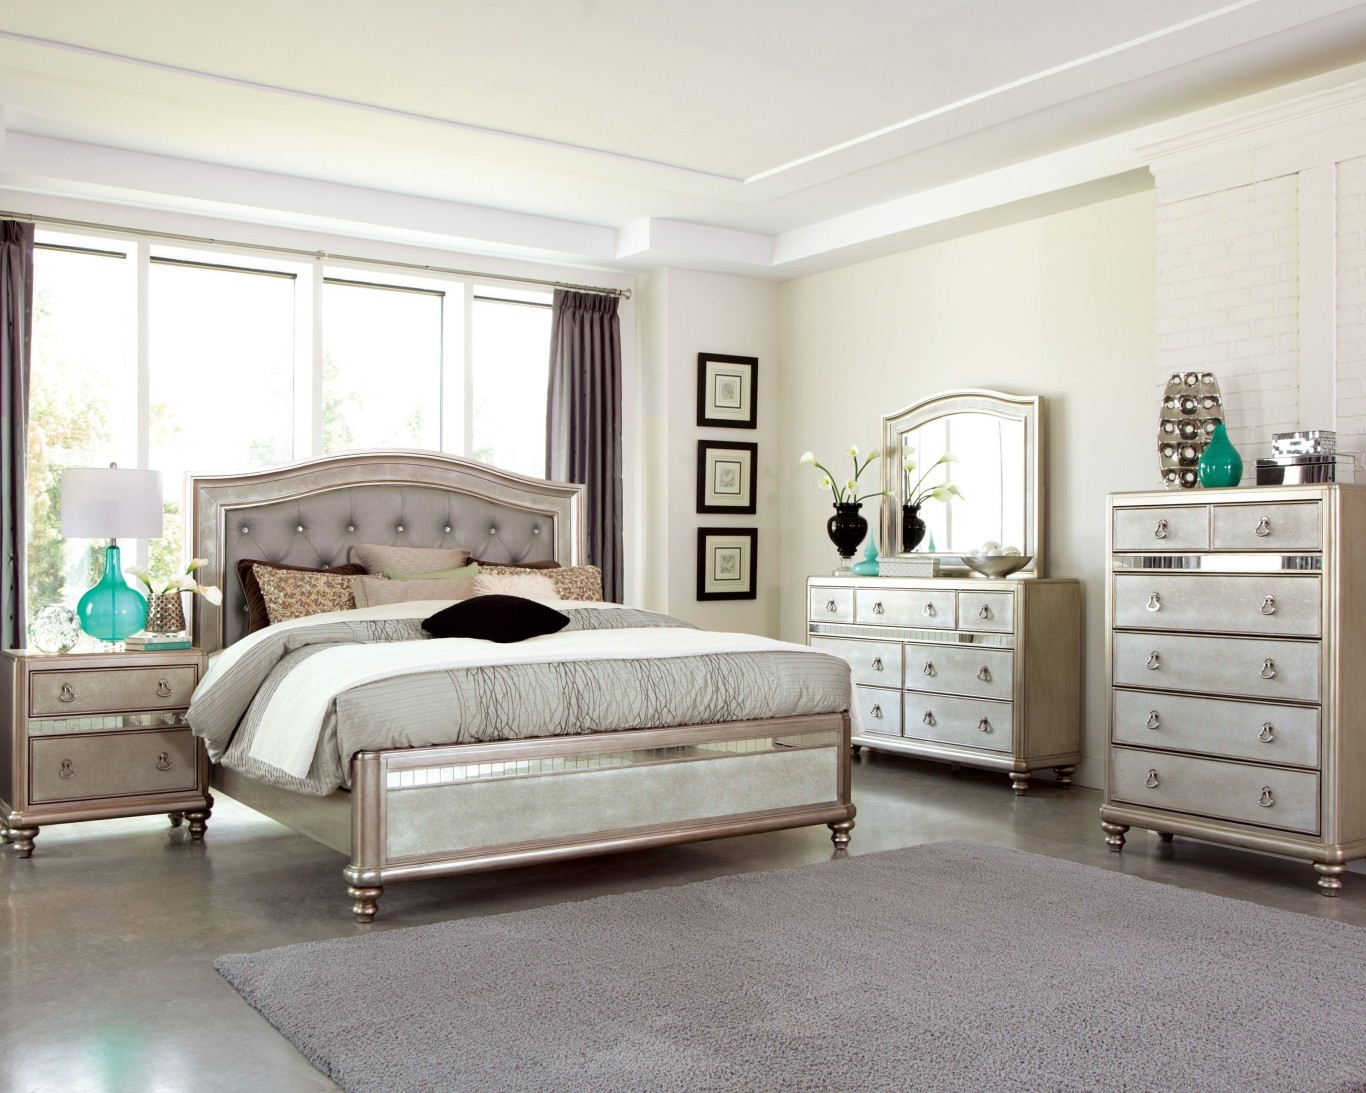 Bedroom Classy Bedroom Ideas Sofia Vergara Bedroom Sets inside proportions 1366 X 1093